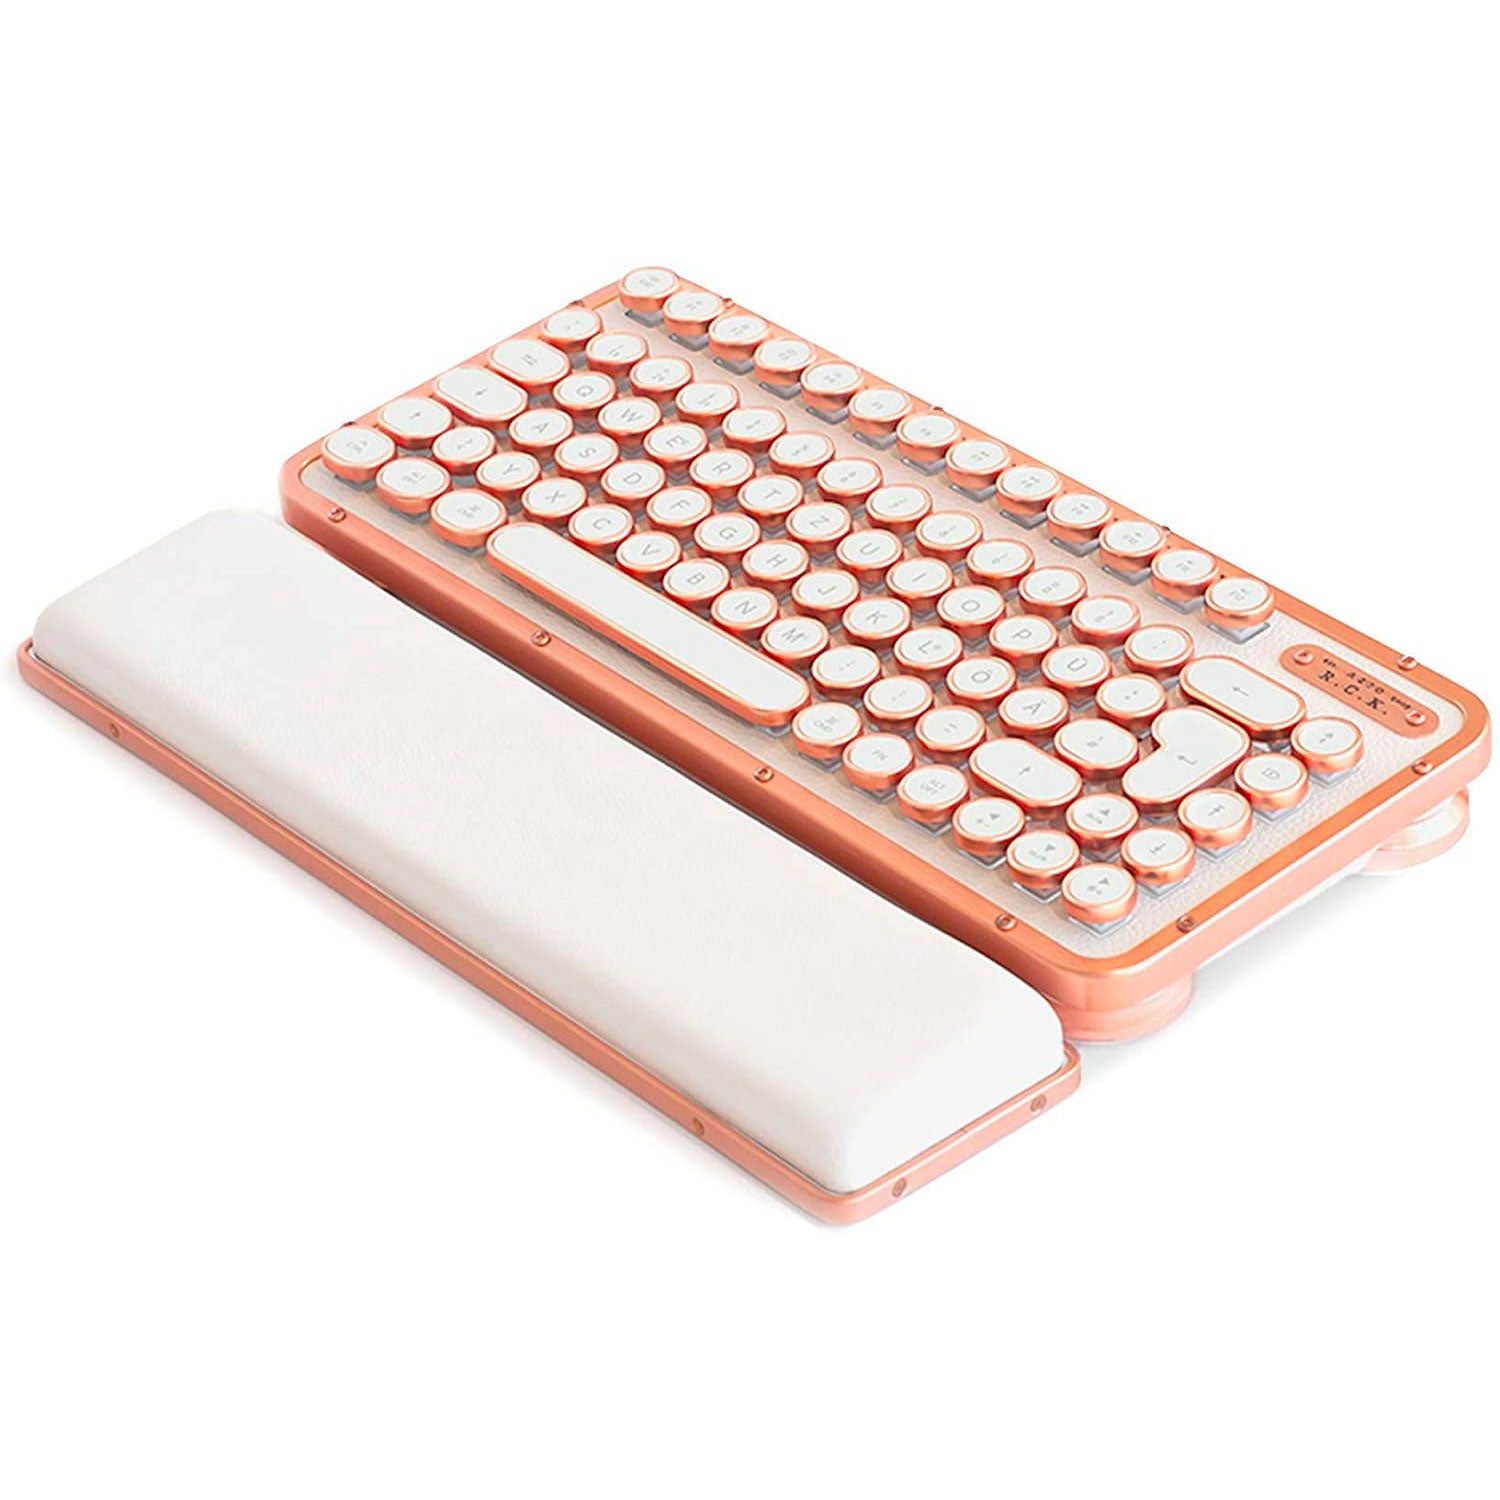 Azio Retro Compact Bluetooth Keyboard Posh